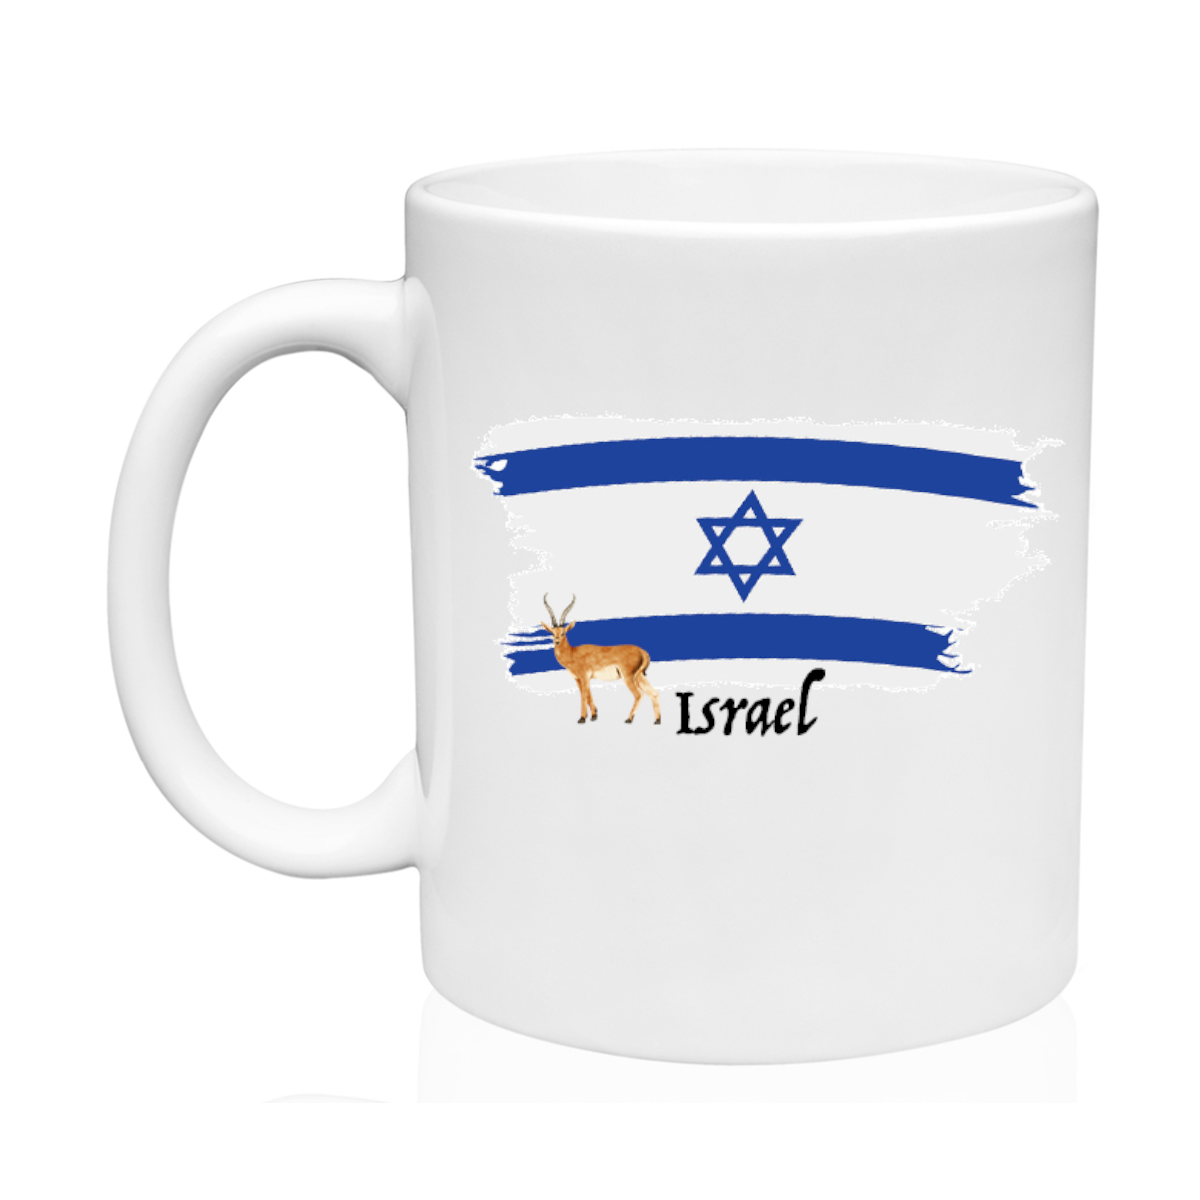 AGAD Turista (I Love Israel Ceramic Mug)